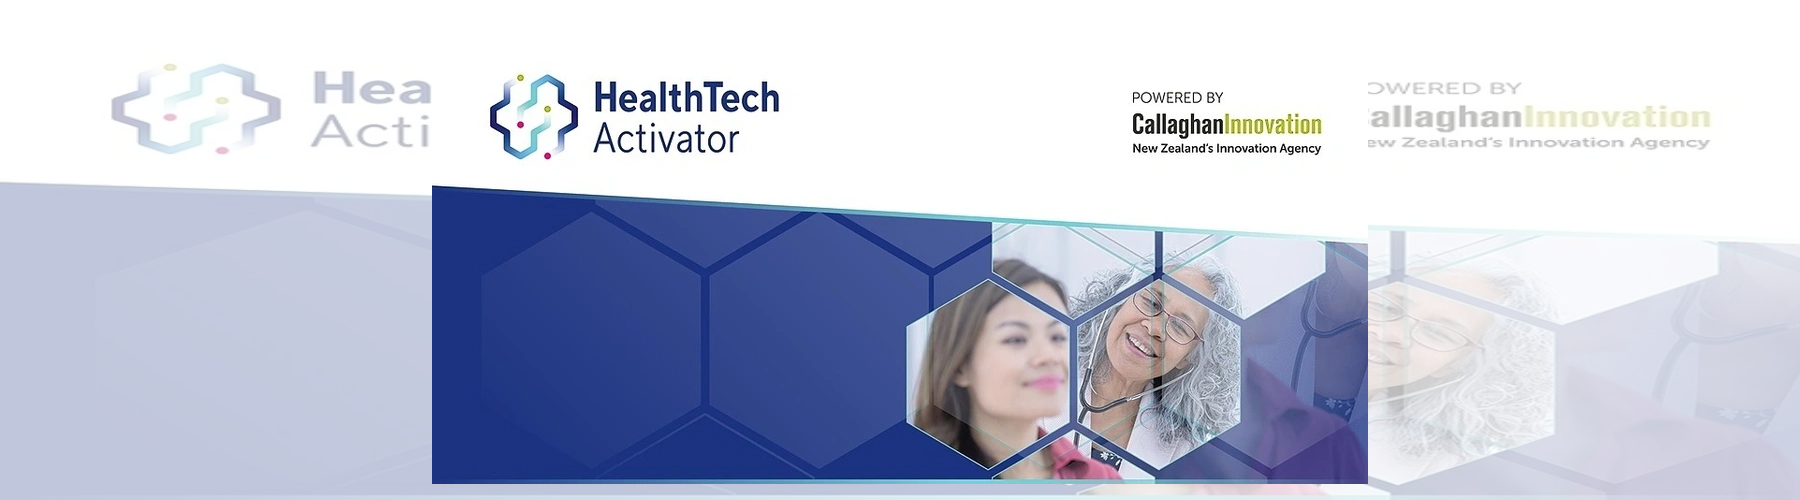 HealthTech Activator event